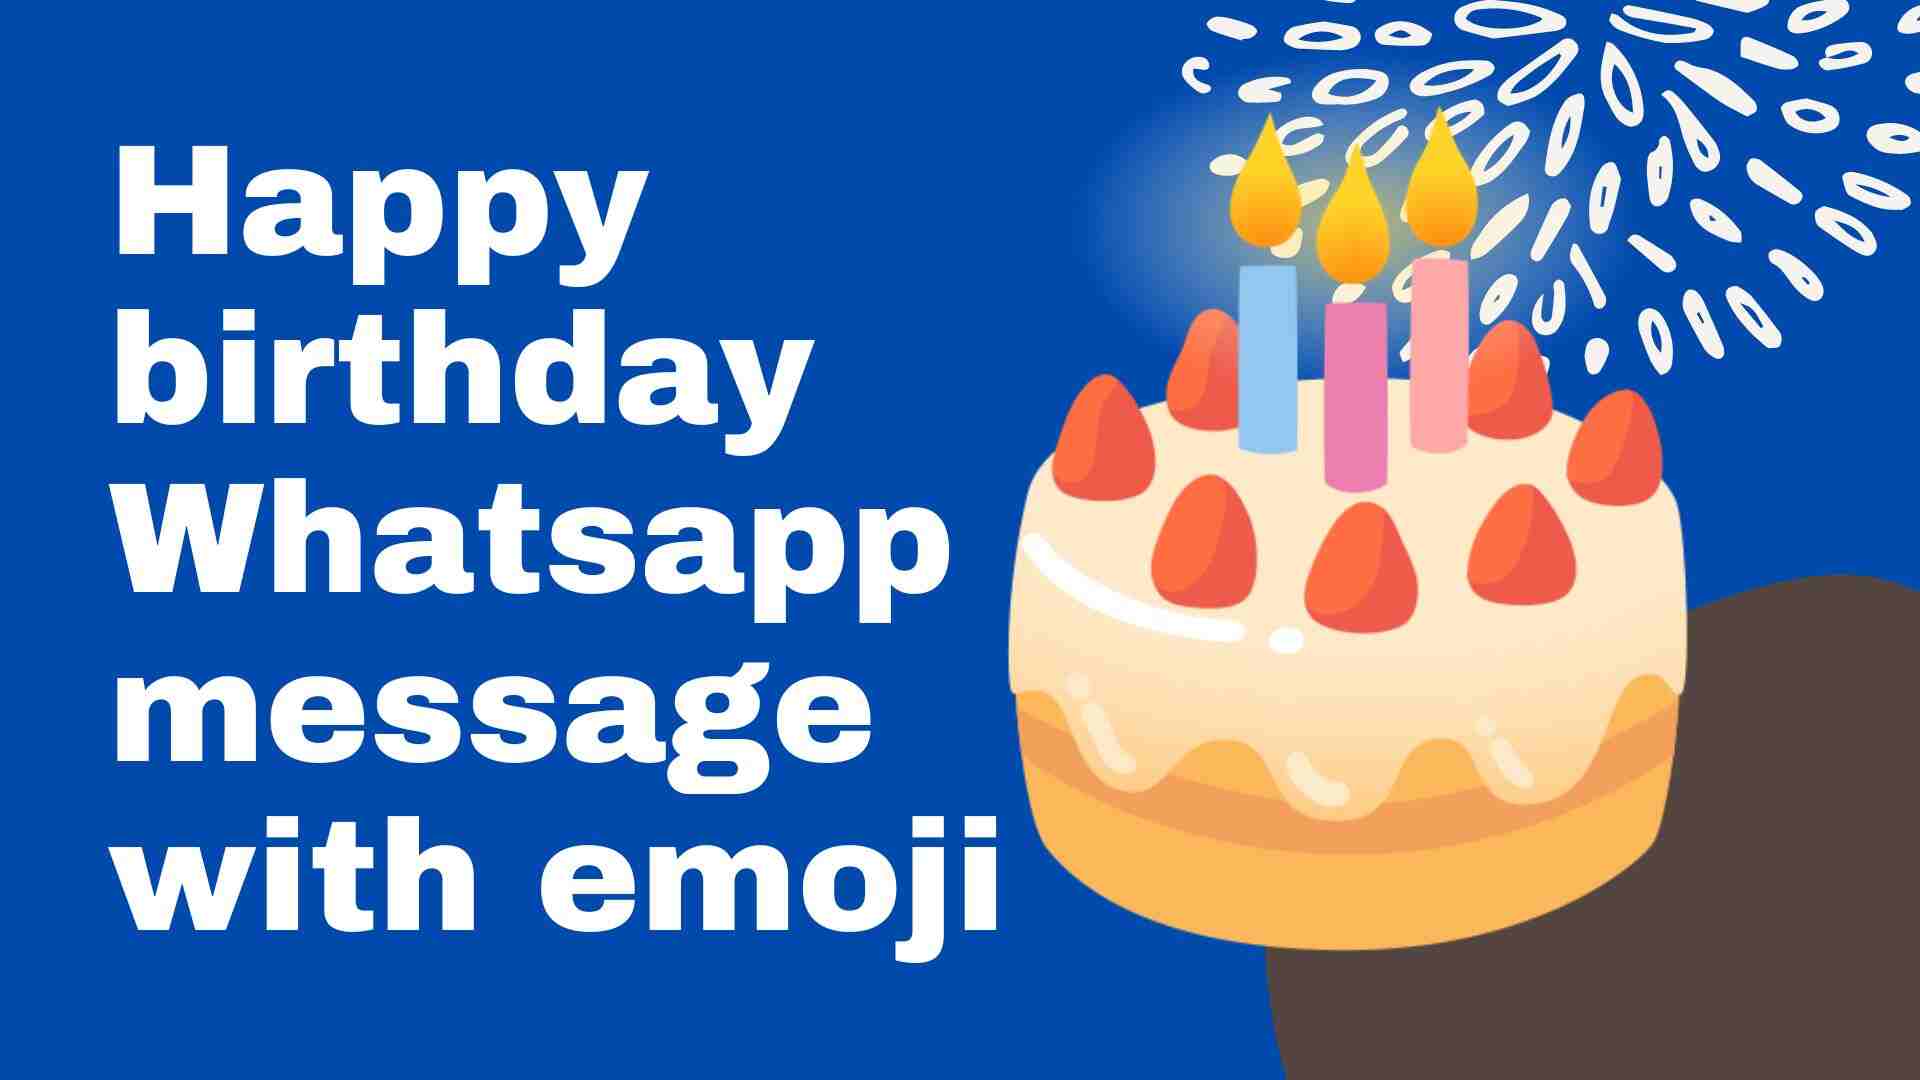 Happy birthday Whatsapp message